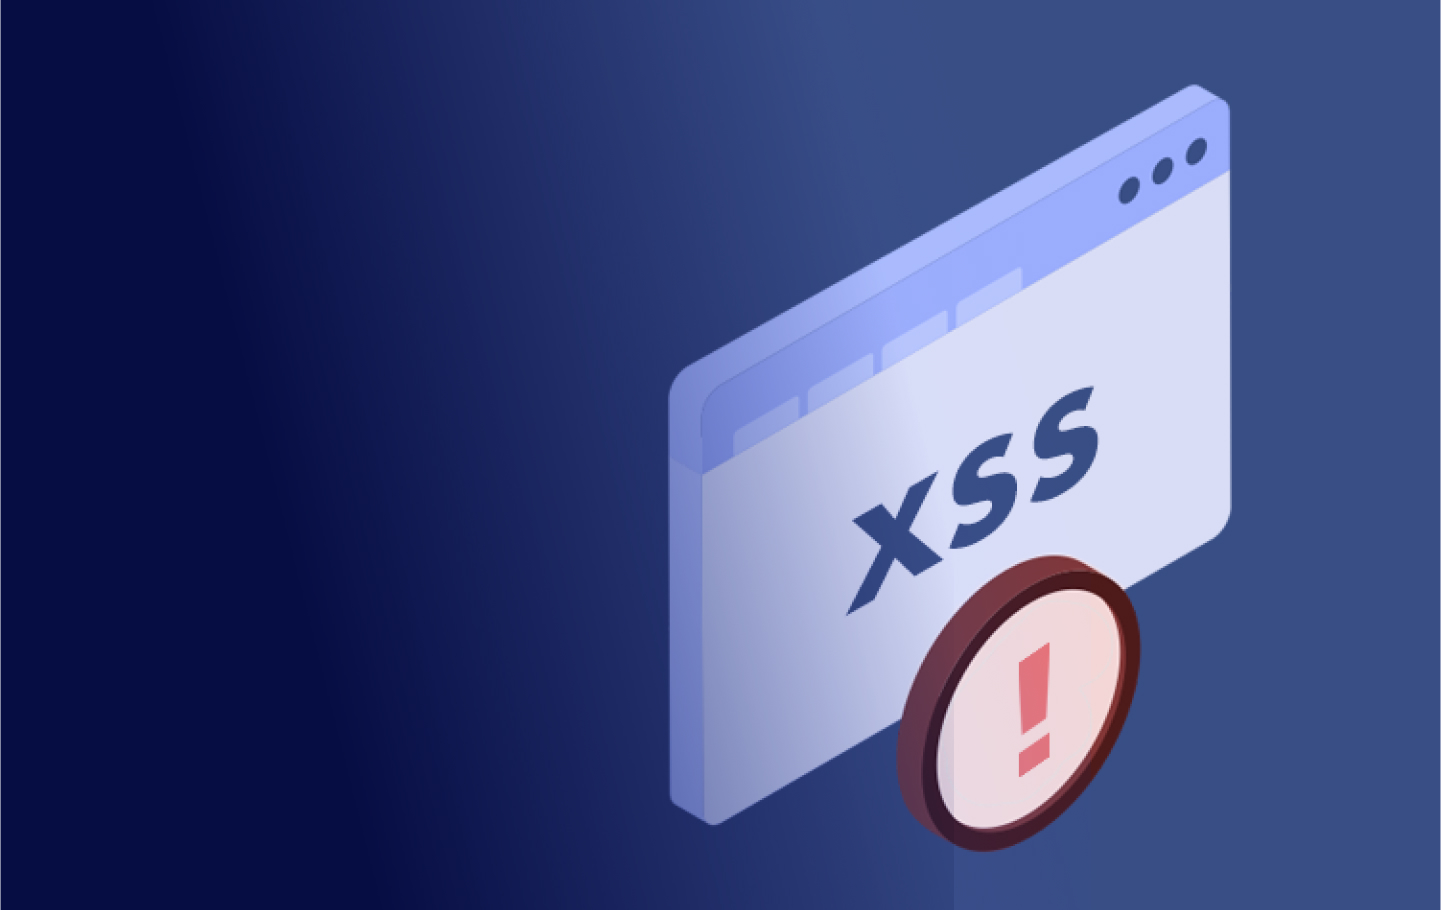 Attack Exploiting XSS Vulnerability in E-commerce Websites